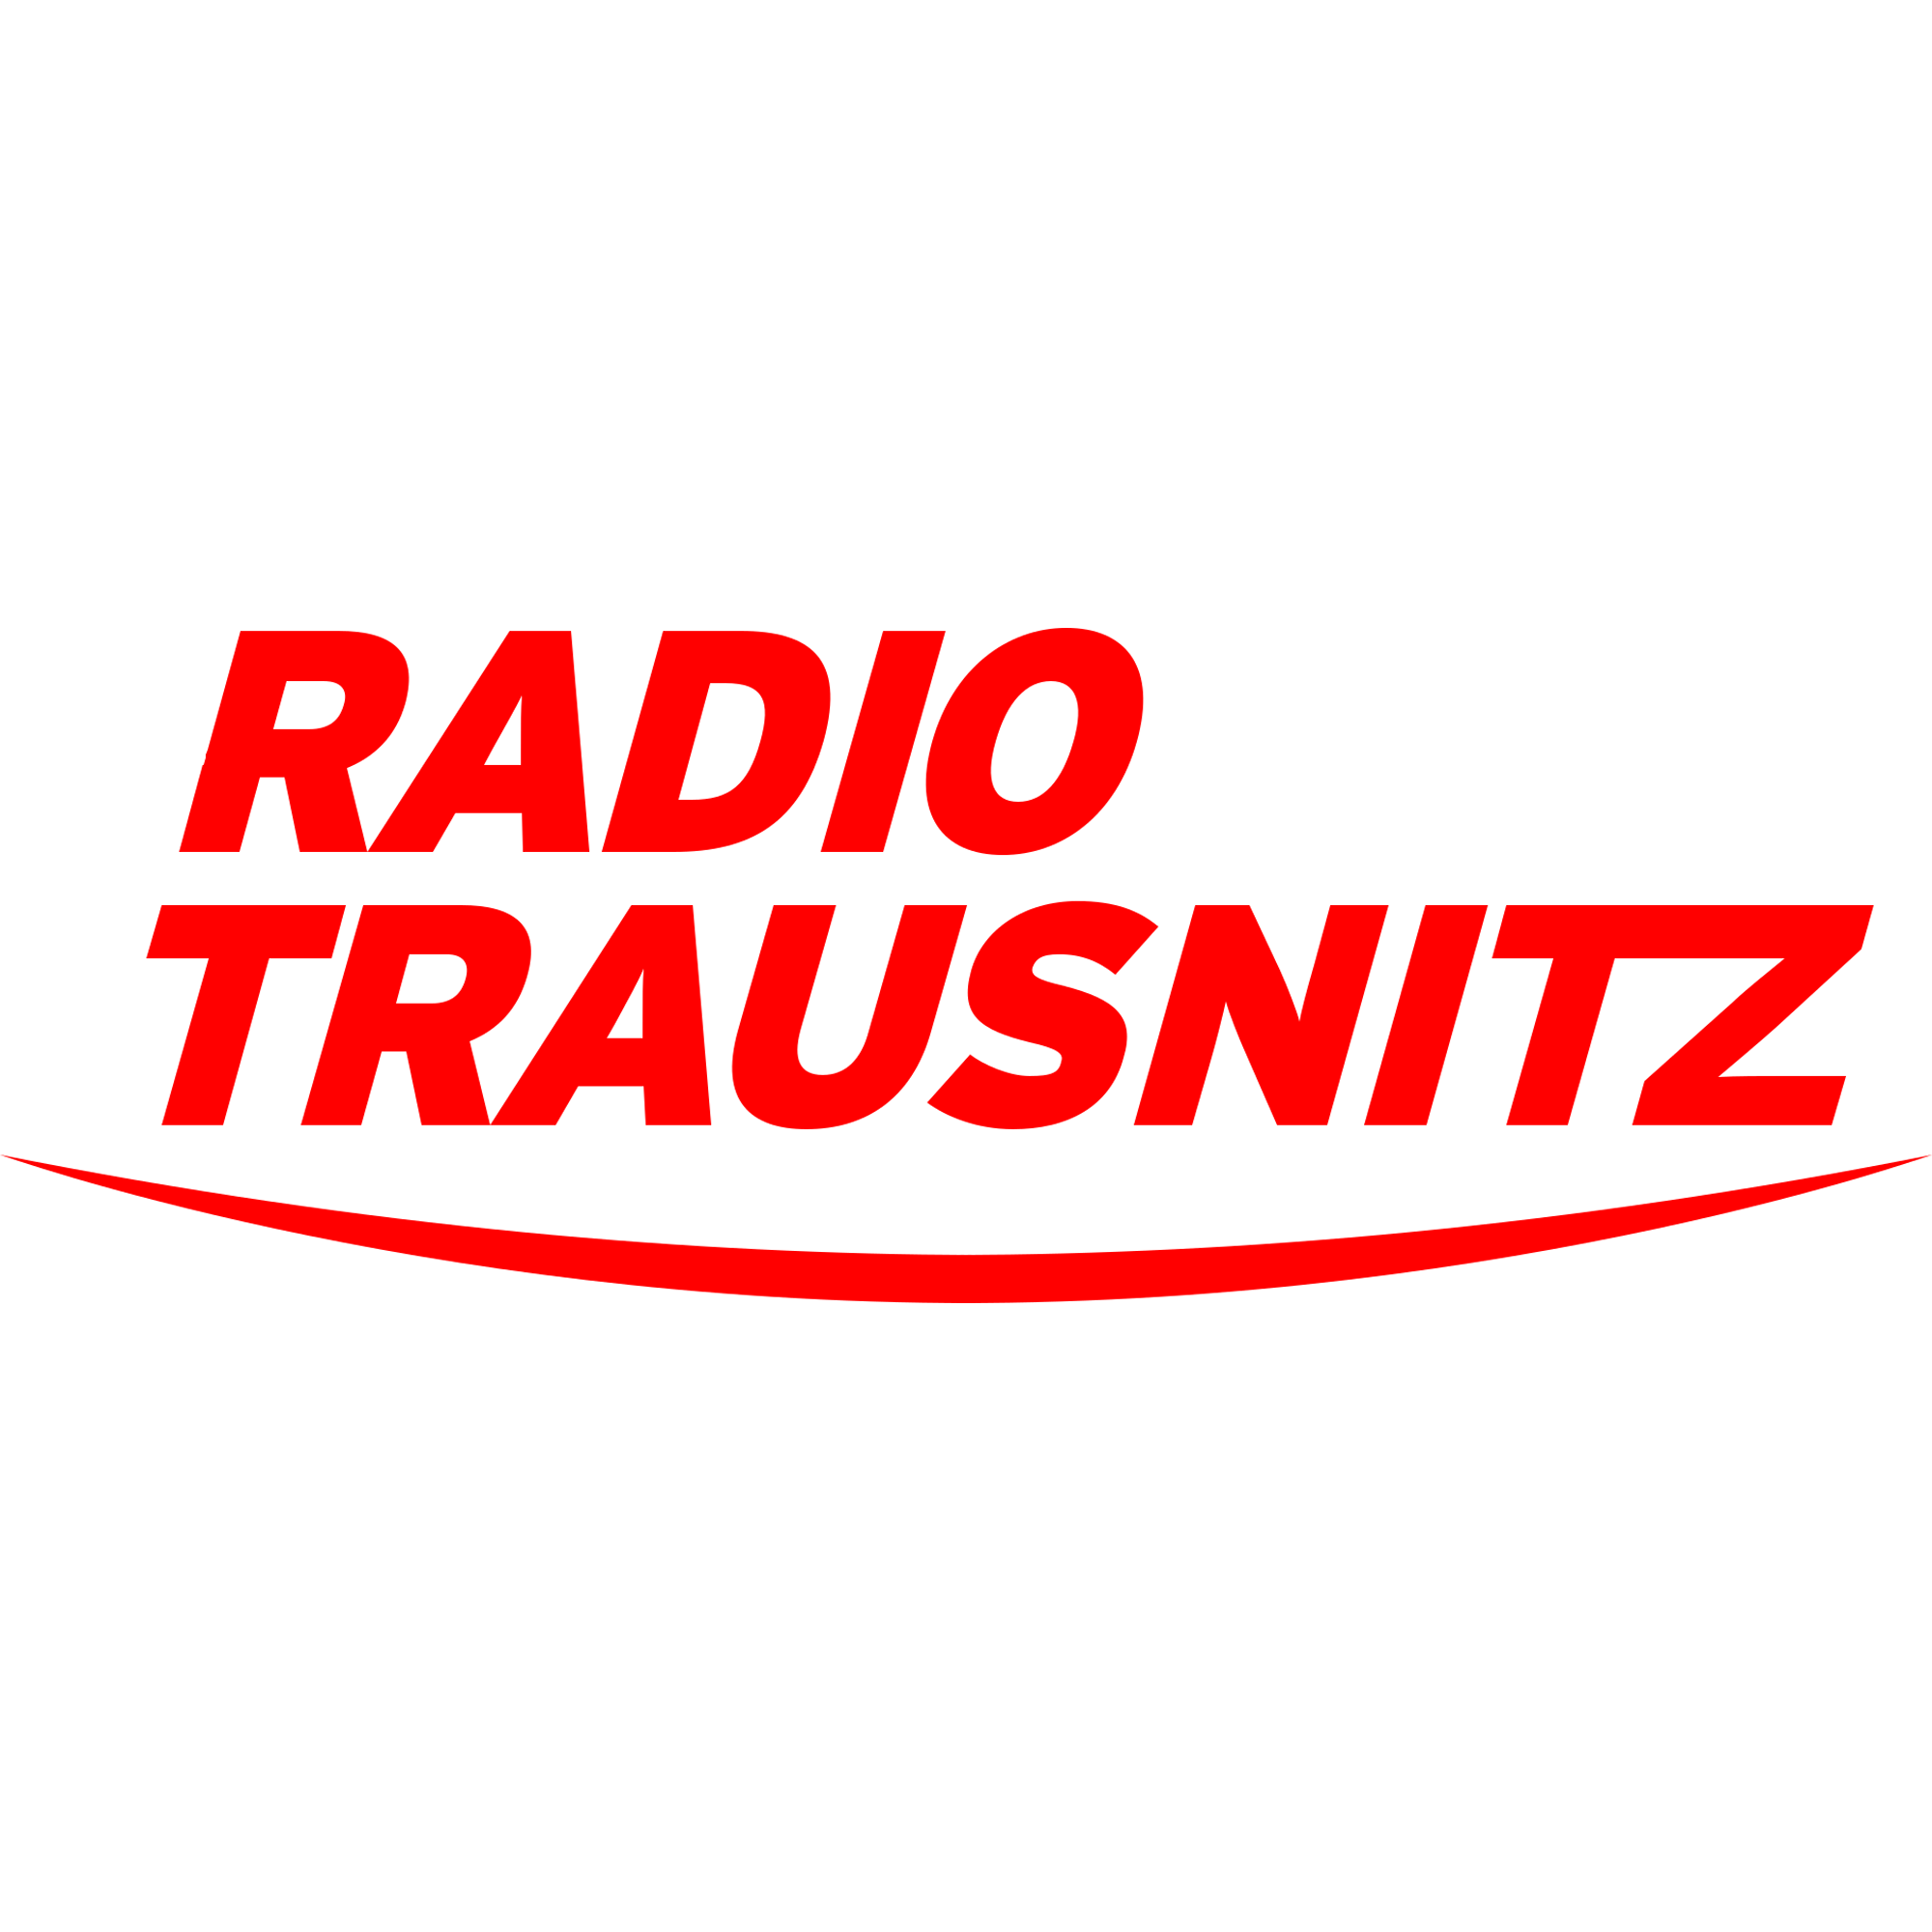 Radio Trausnitz Logo  Transparent Photo